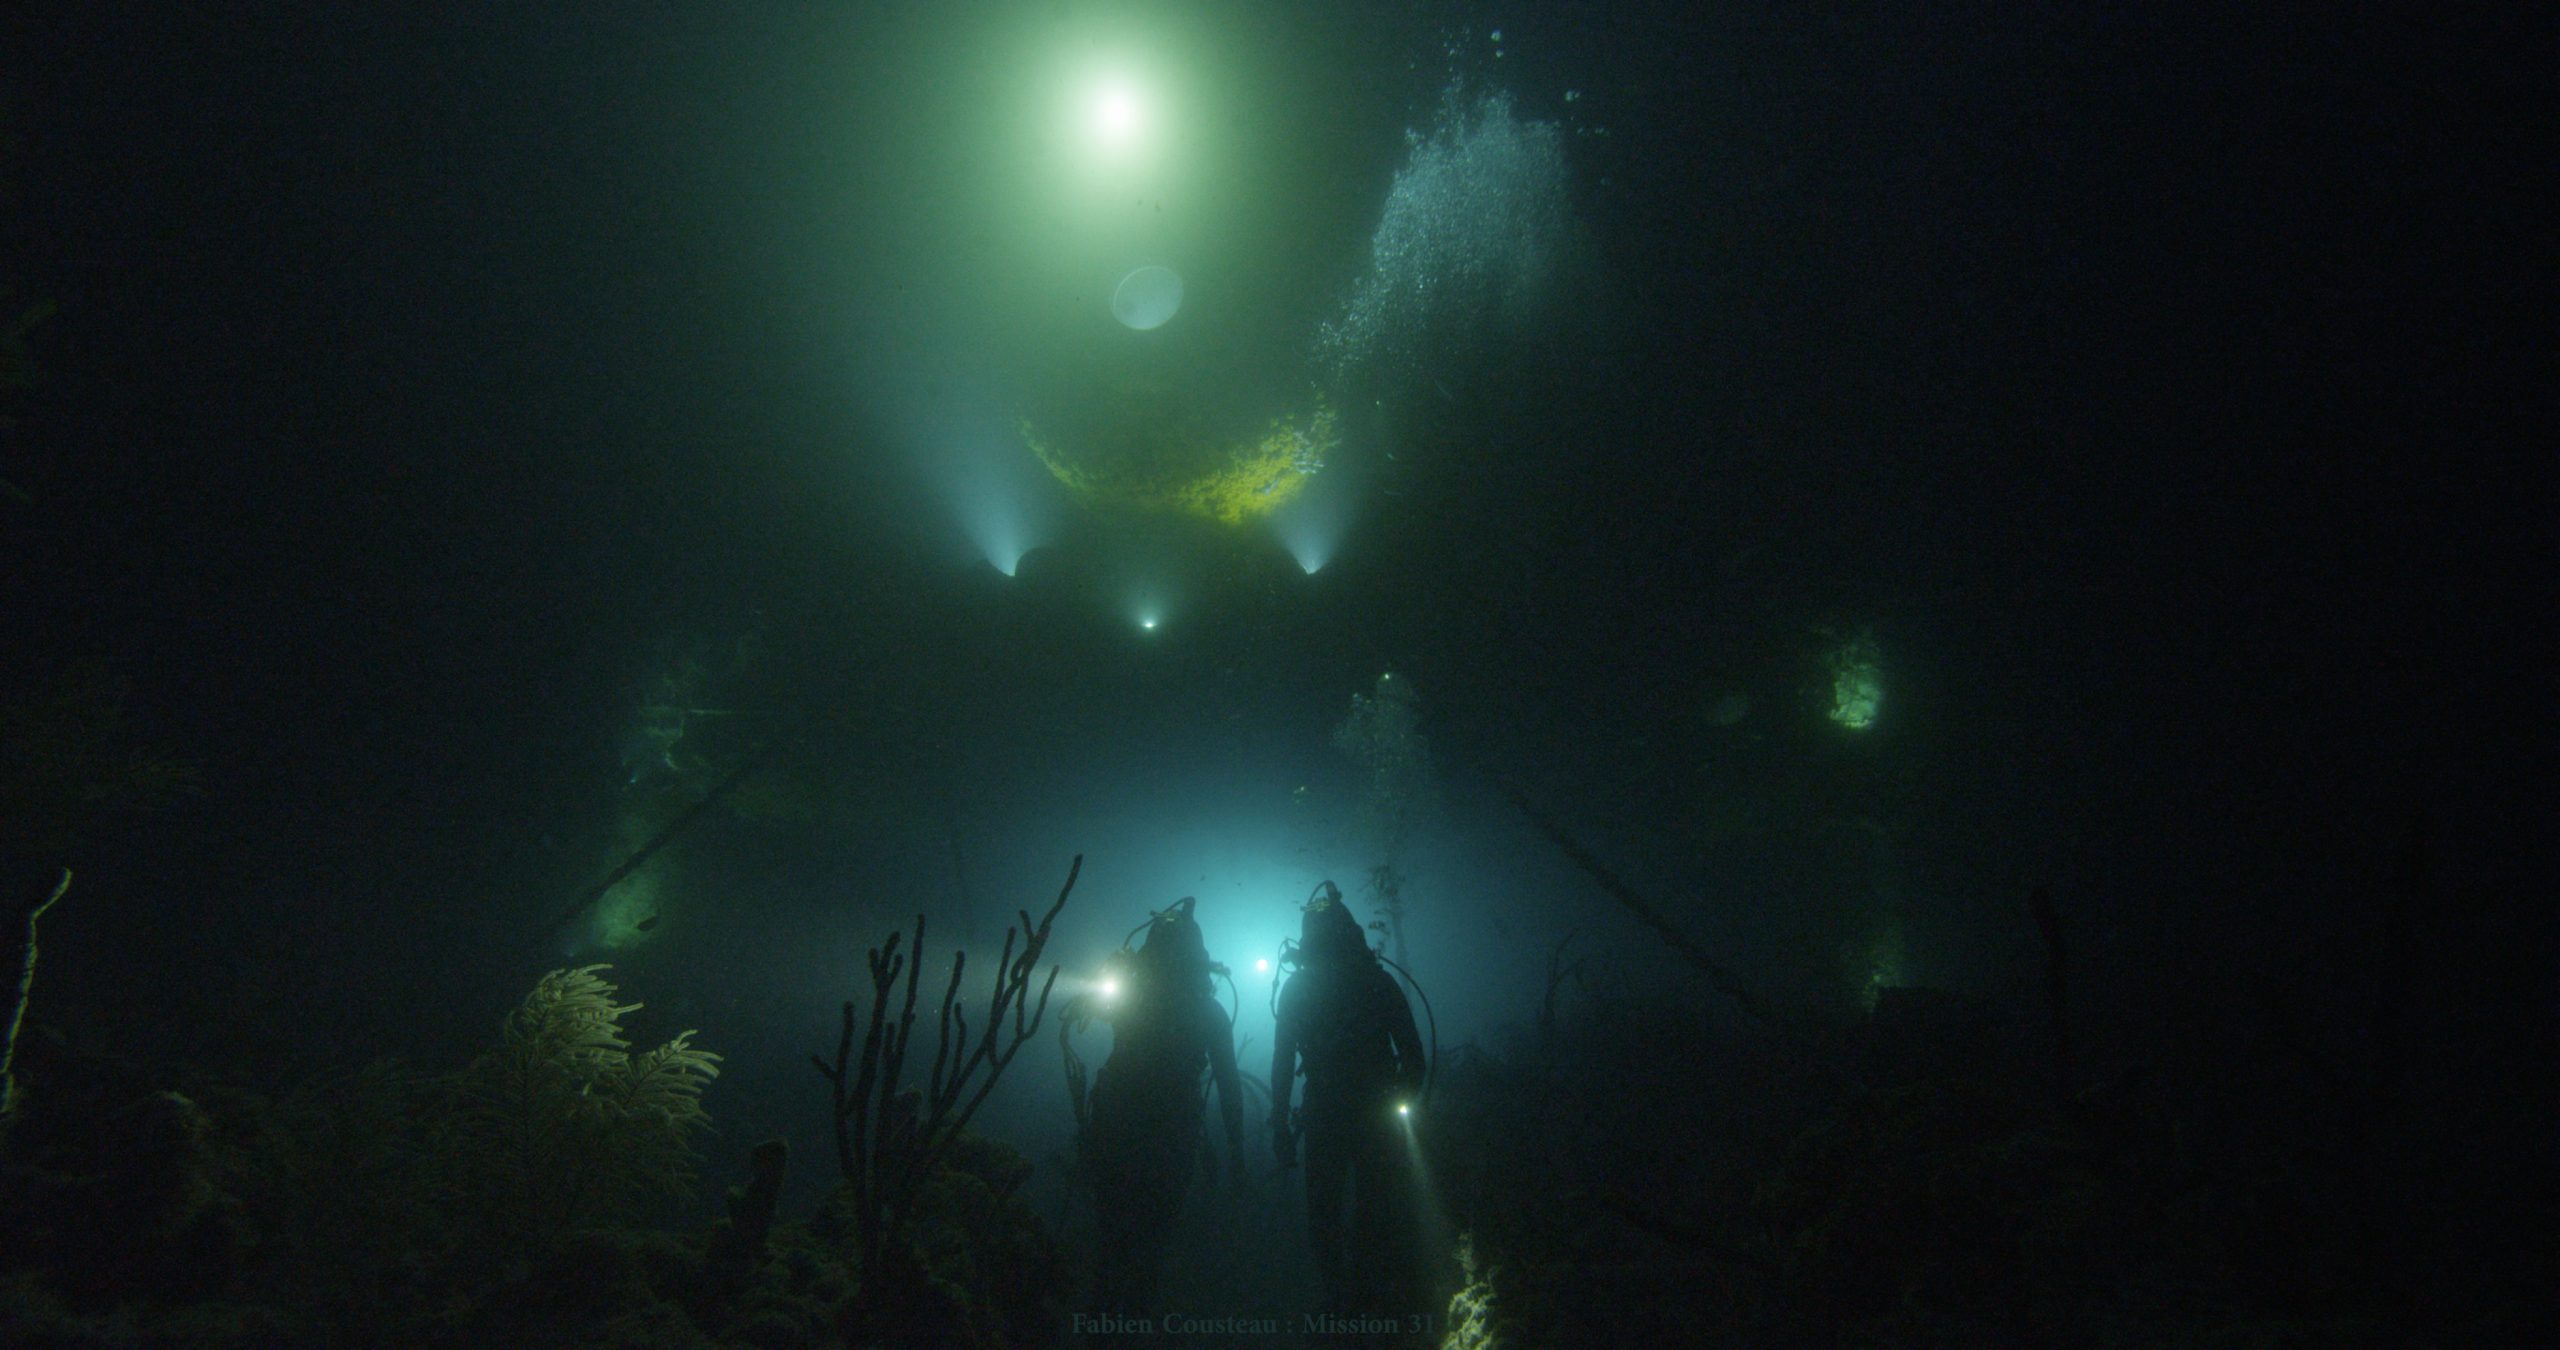 Ocean explorer Fabien Cousteau leads Mission 31 team on a night exploration dive out of Aquarius underwater lab off the Florida Keys